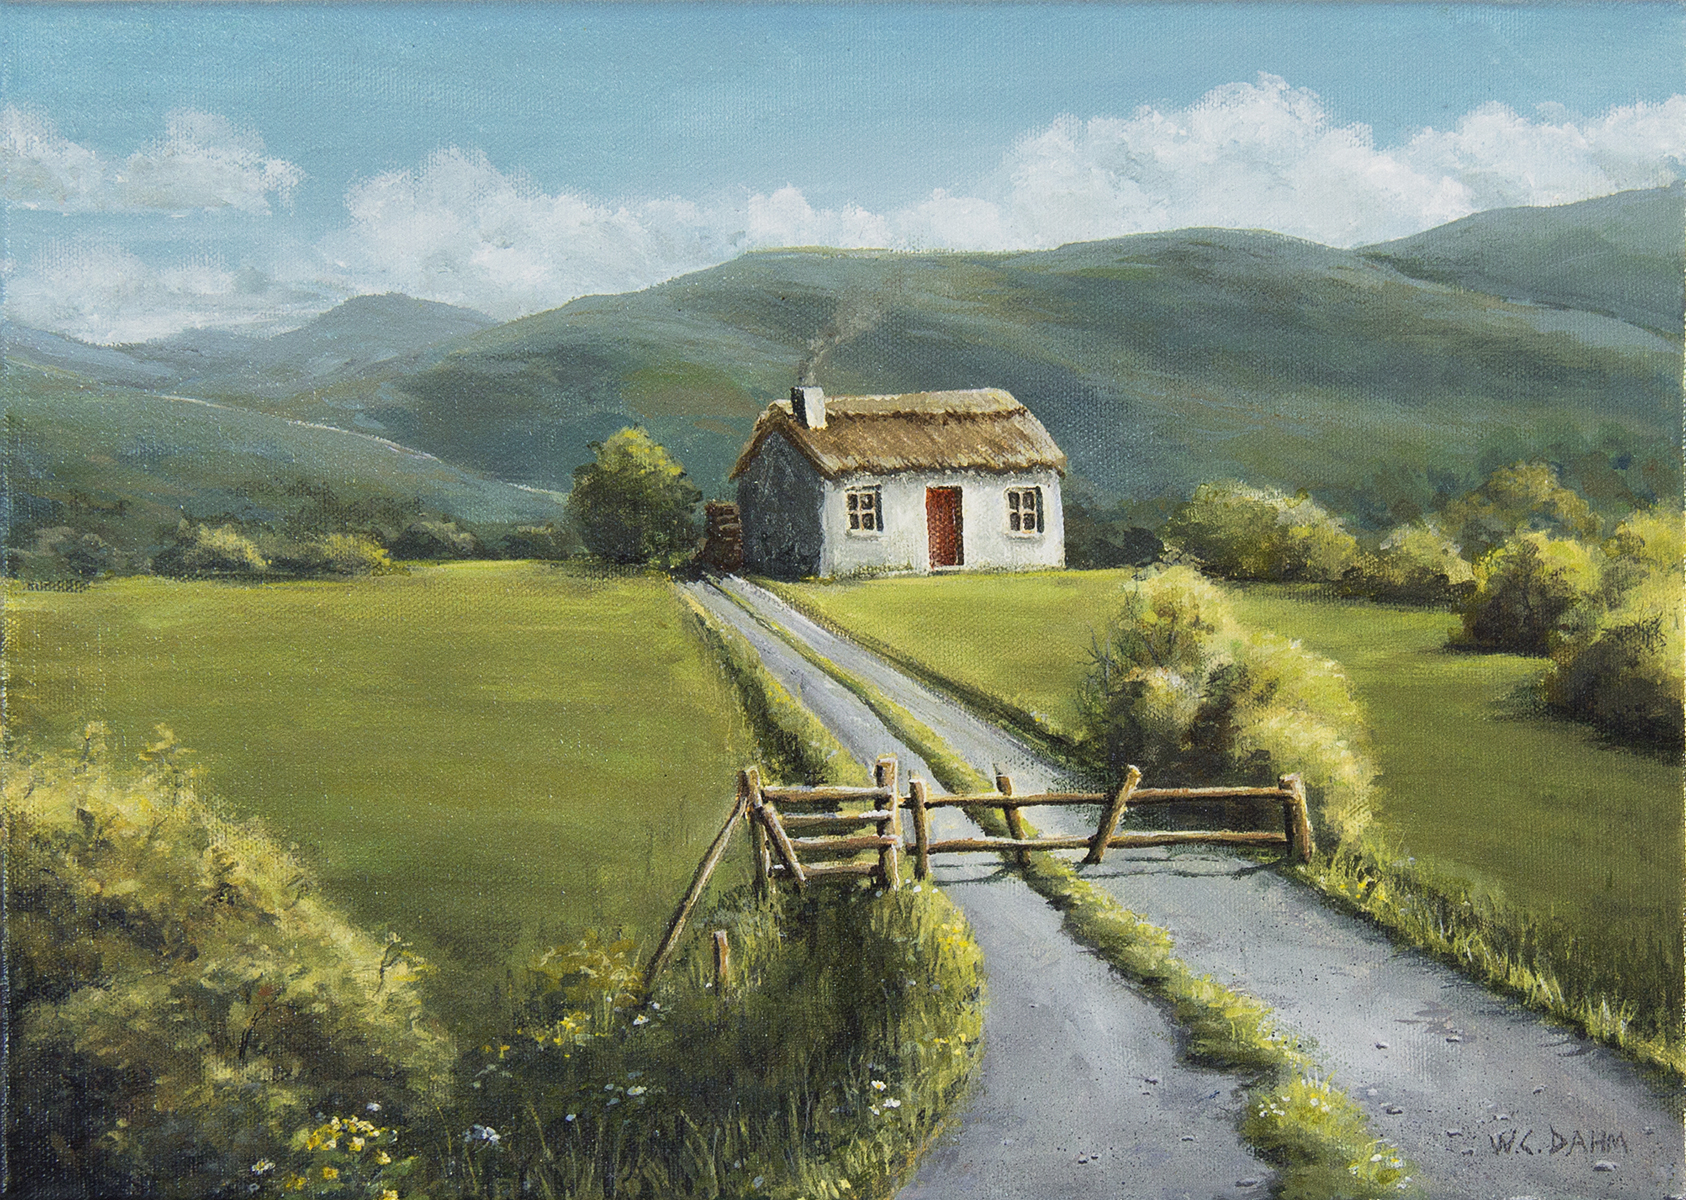 Acrylic Painting Country Farm House